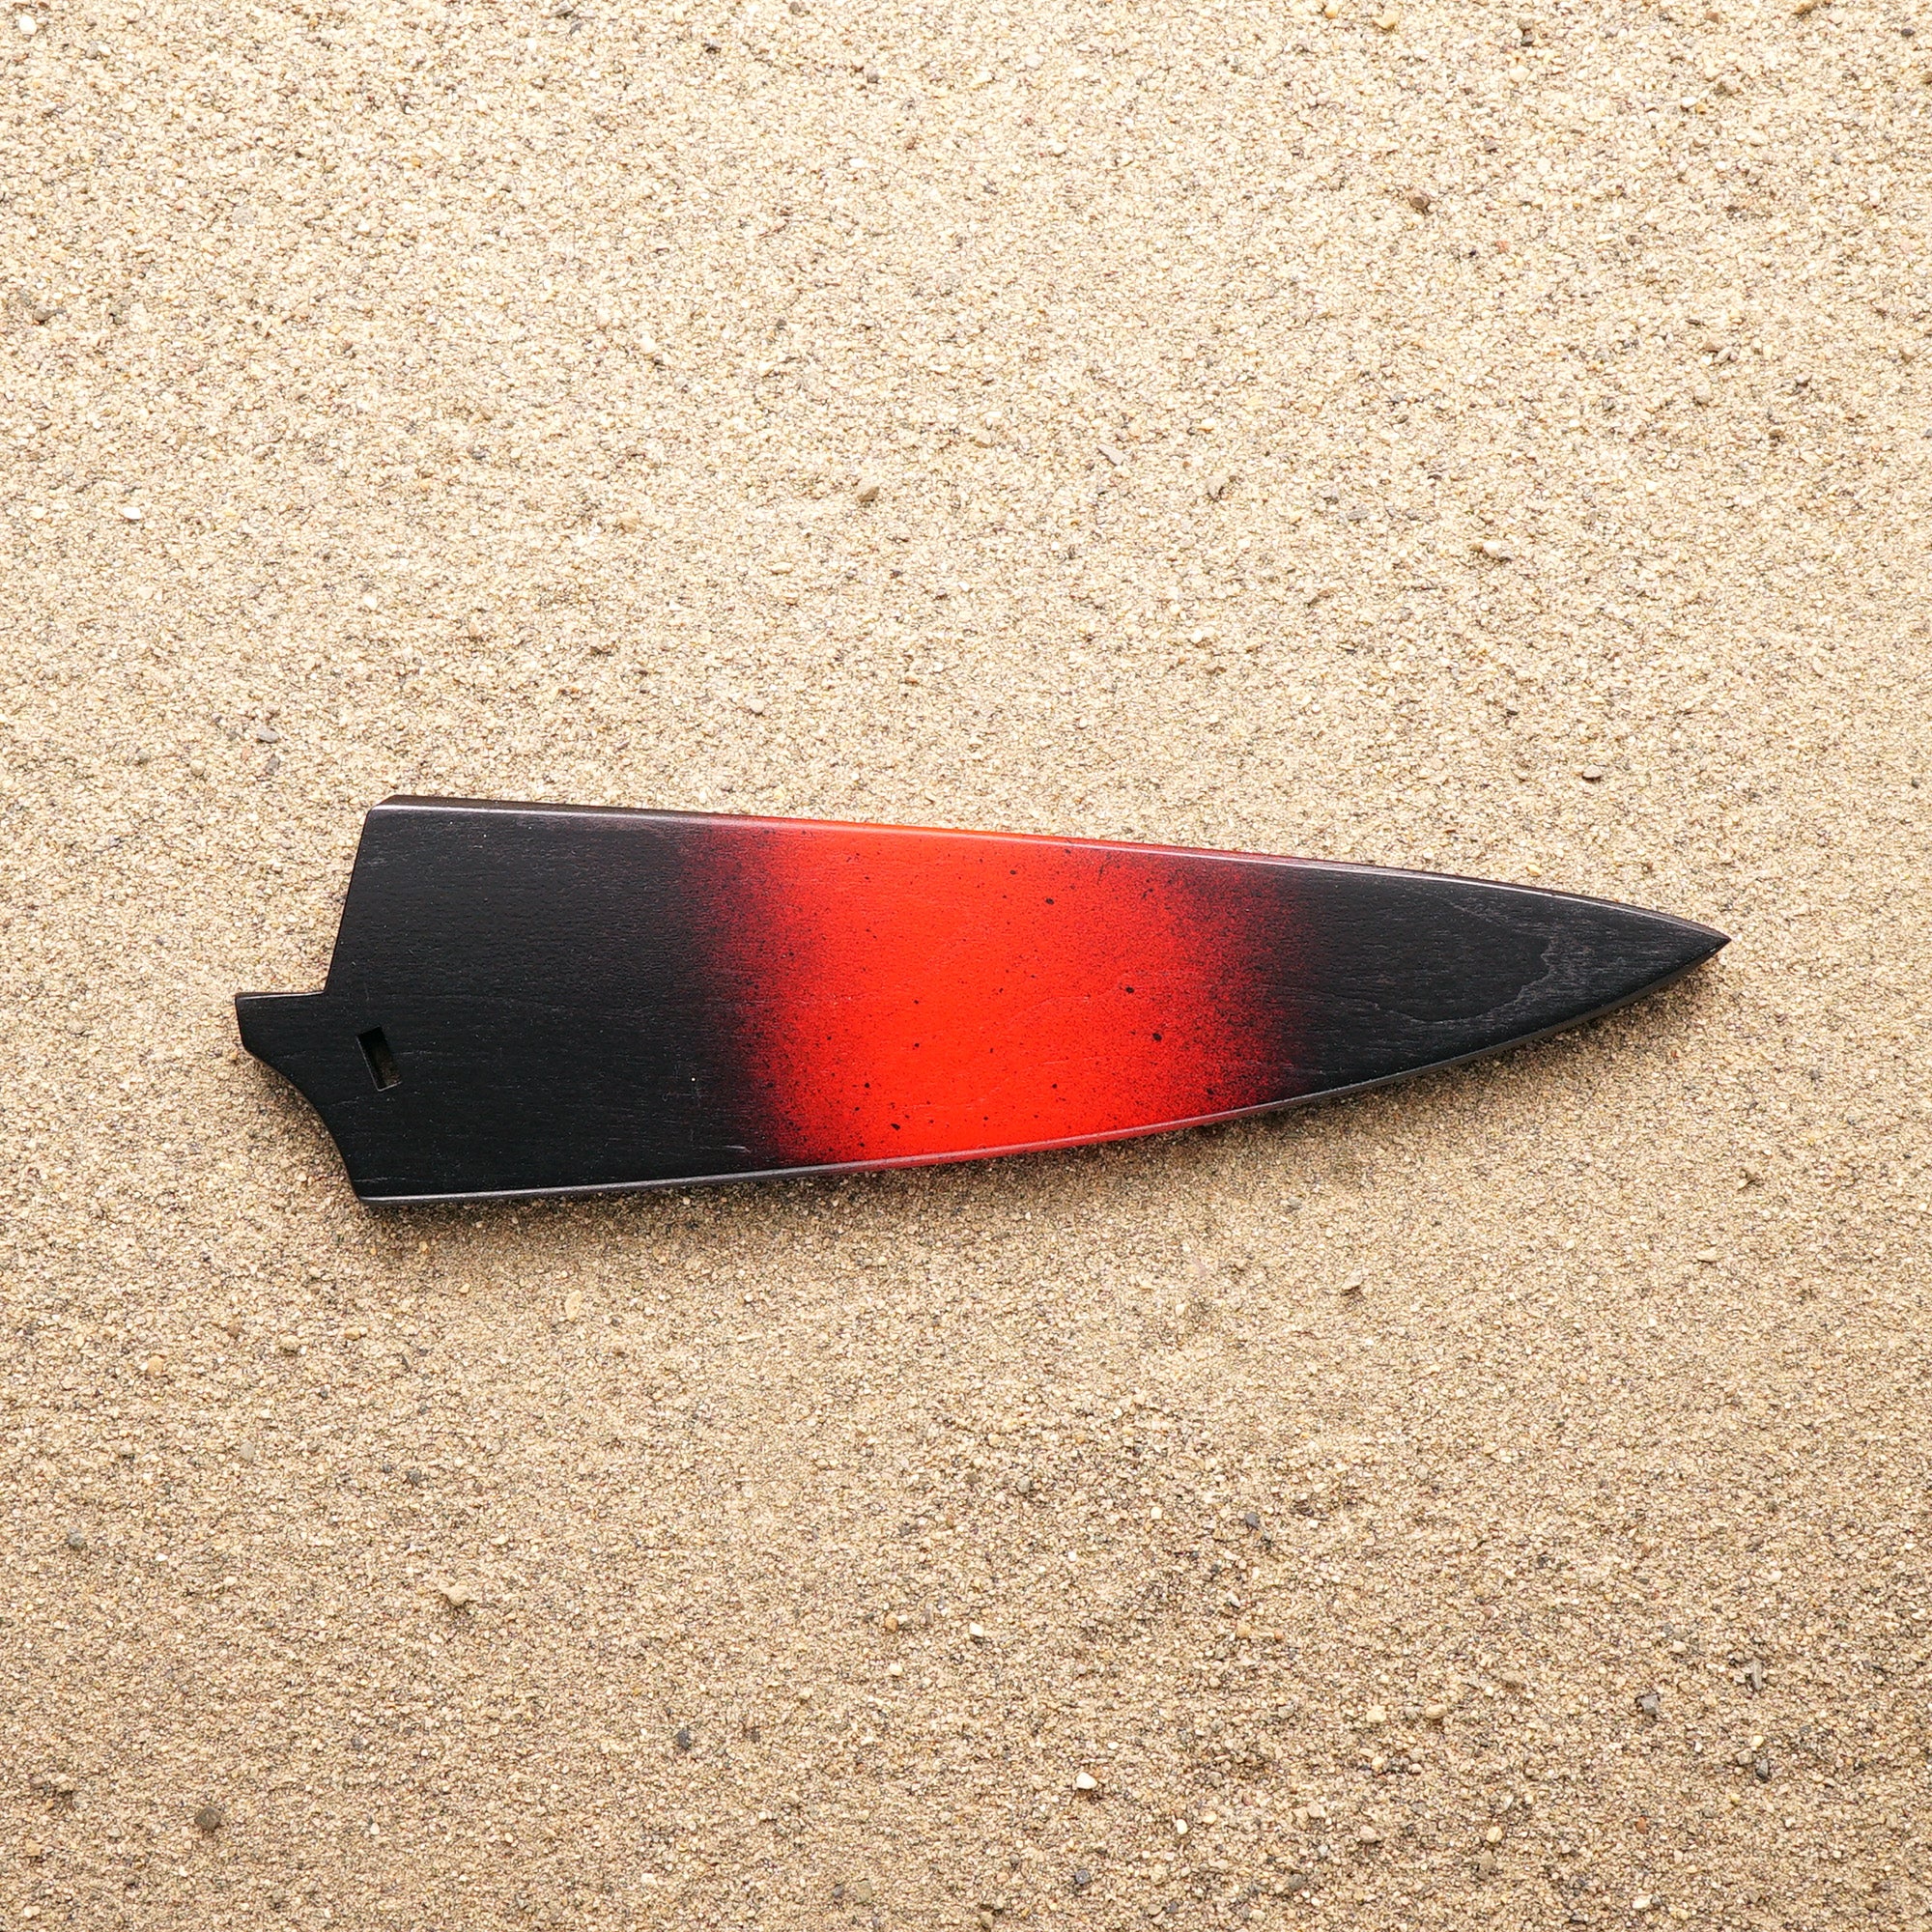 Black and red wood saya knife sheath for Town Cutler Baja 7" chef knife.